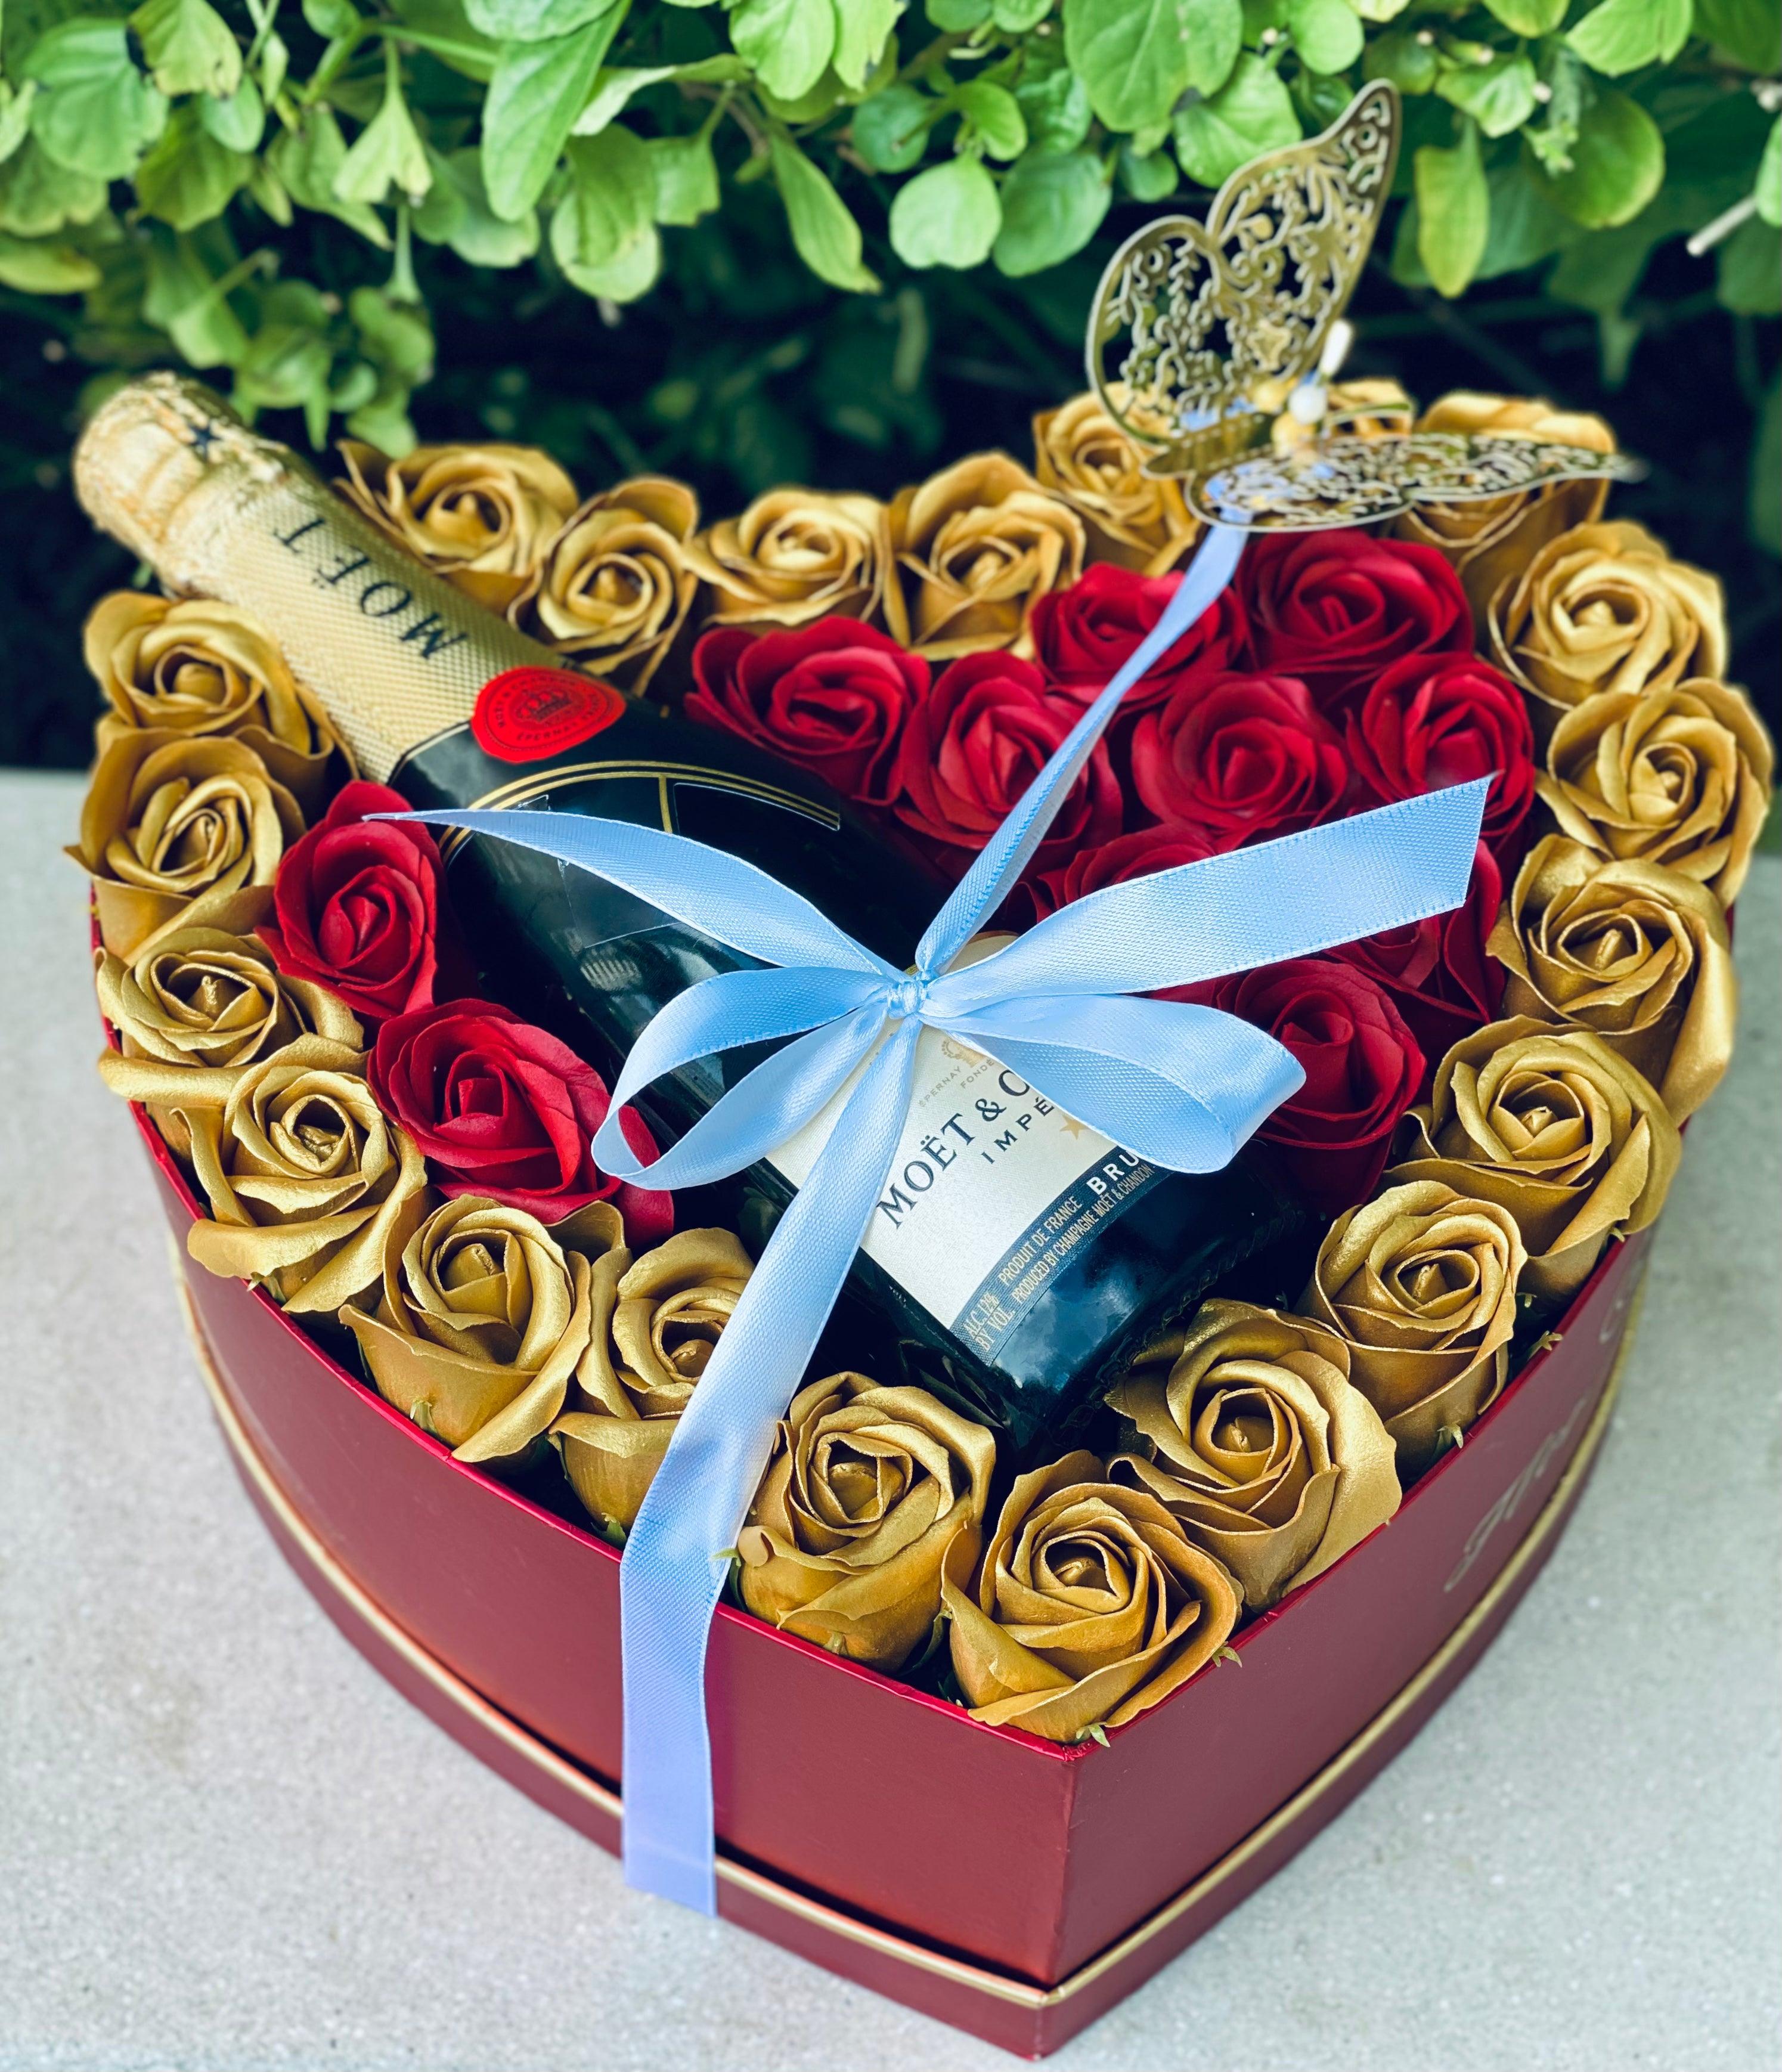 XL Scented Rose Soaps Gift Box - Flor De Lux